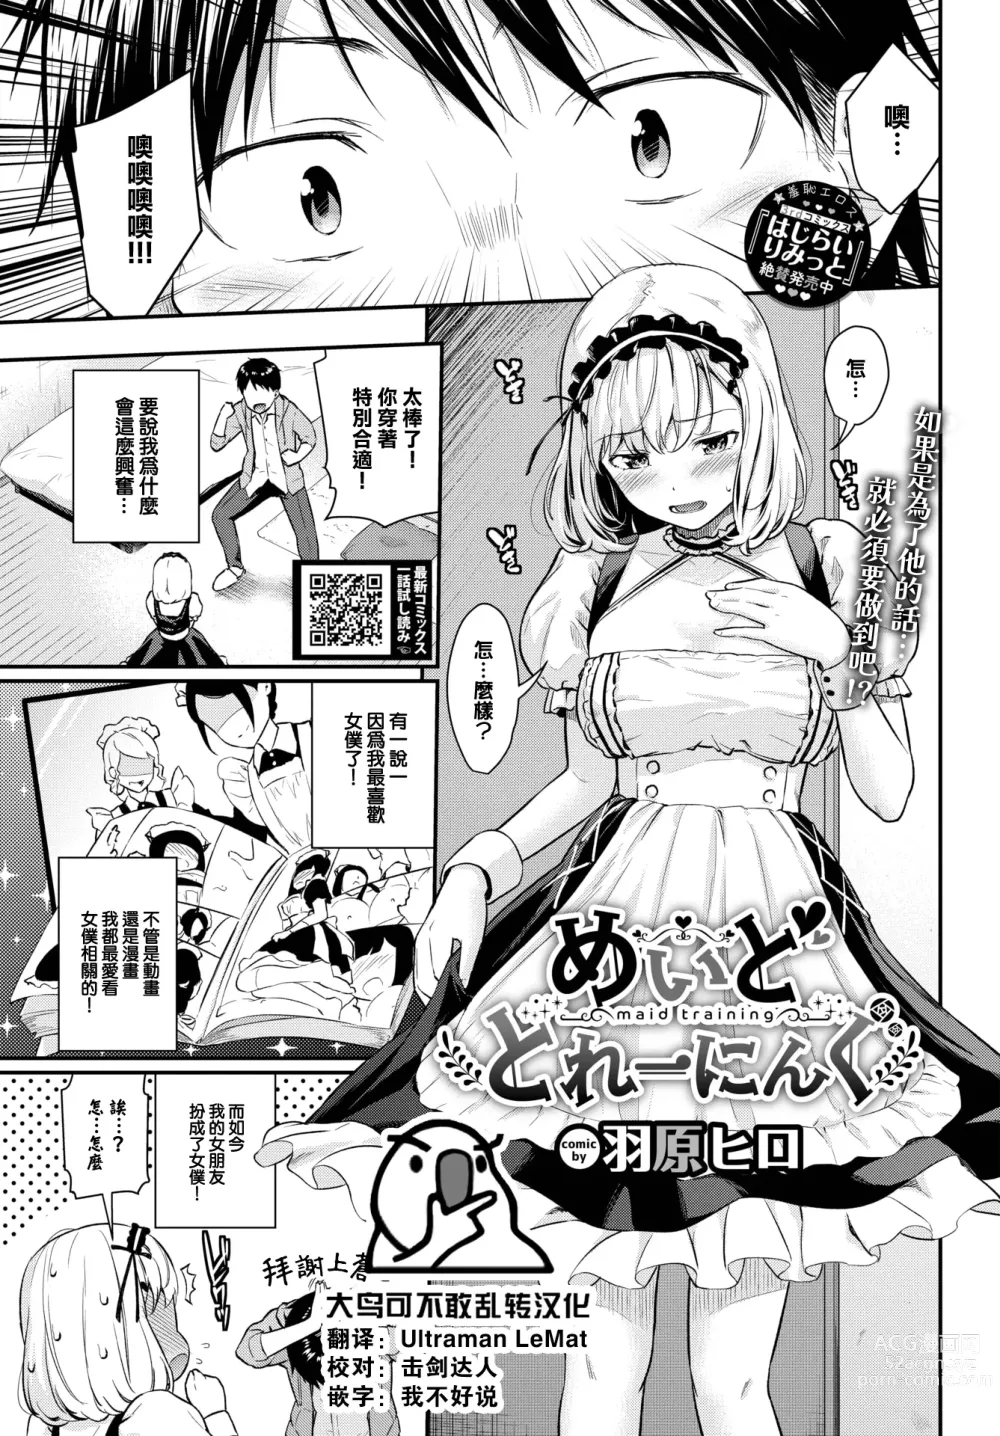 Page 1 of manga Maid Training